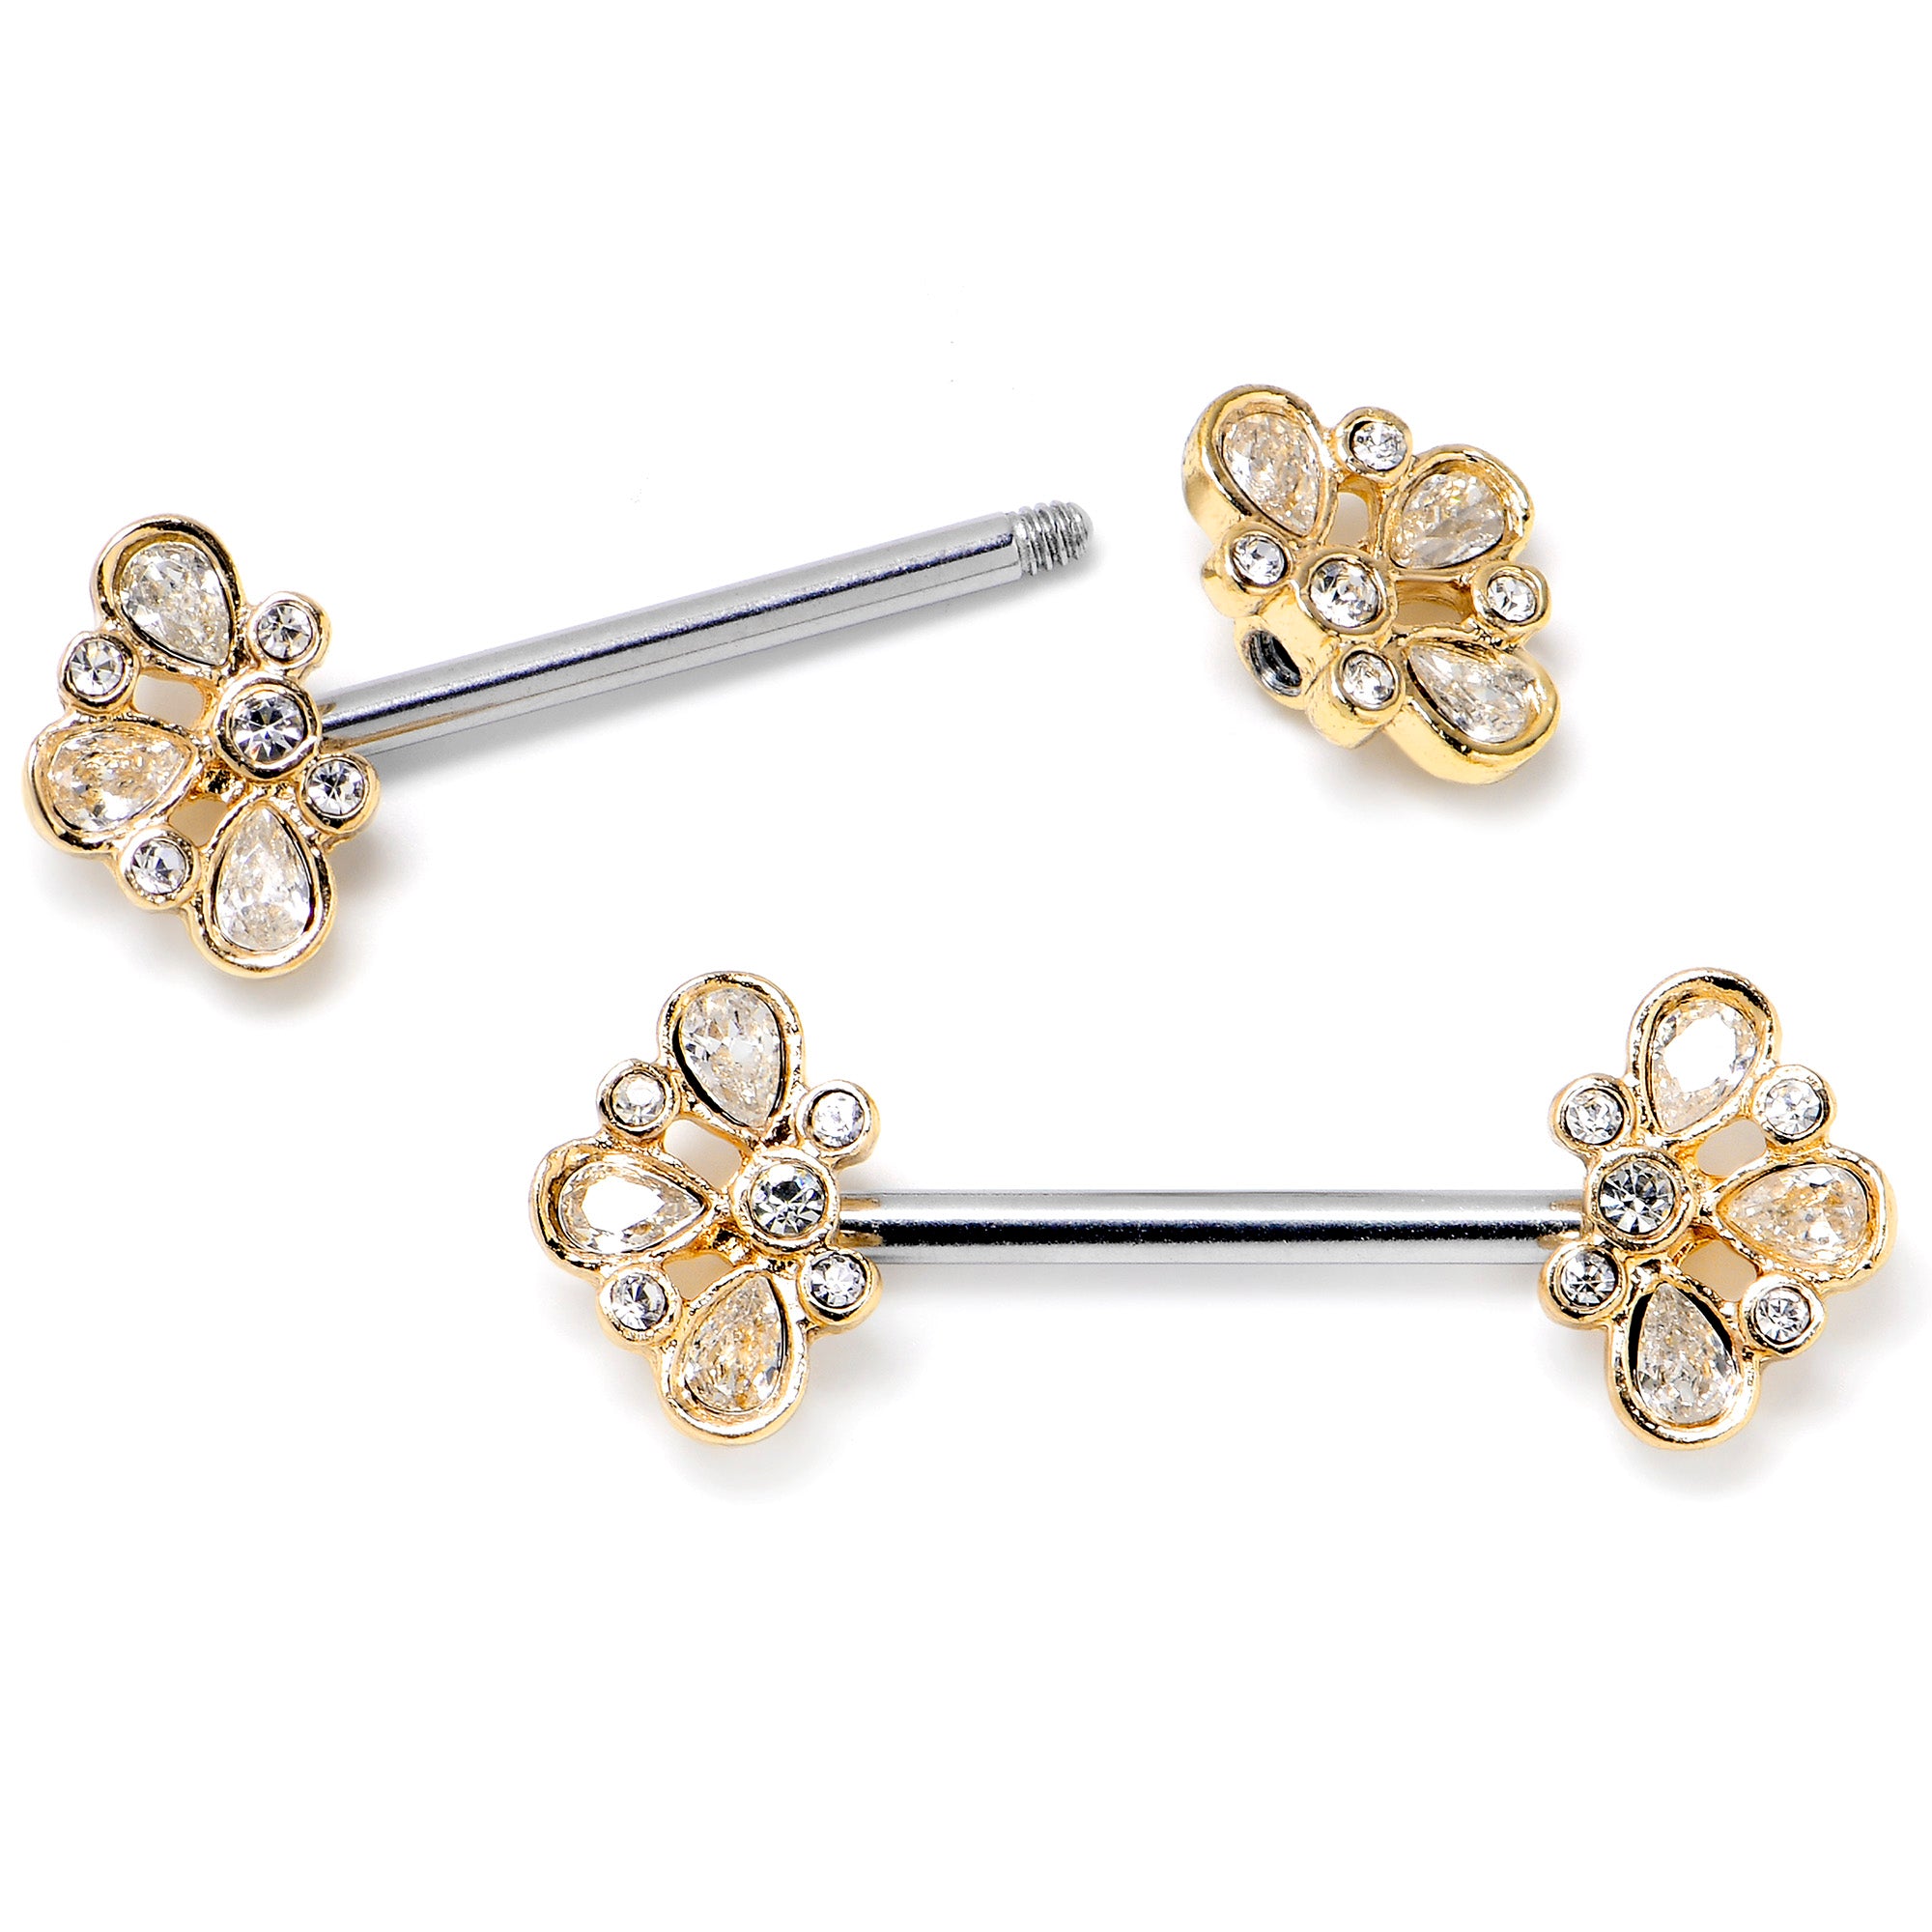 14 Gauge 9/16 Clear Gem Golden Crown Deluxe Barbell Nipple Ring Set